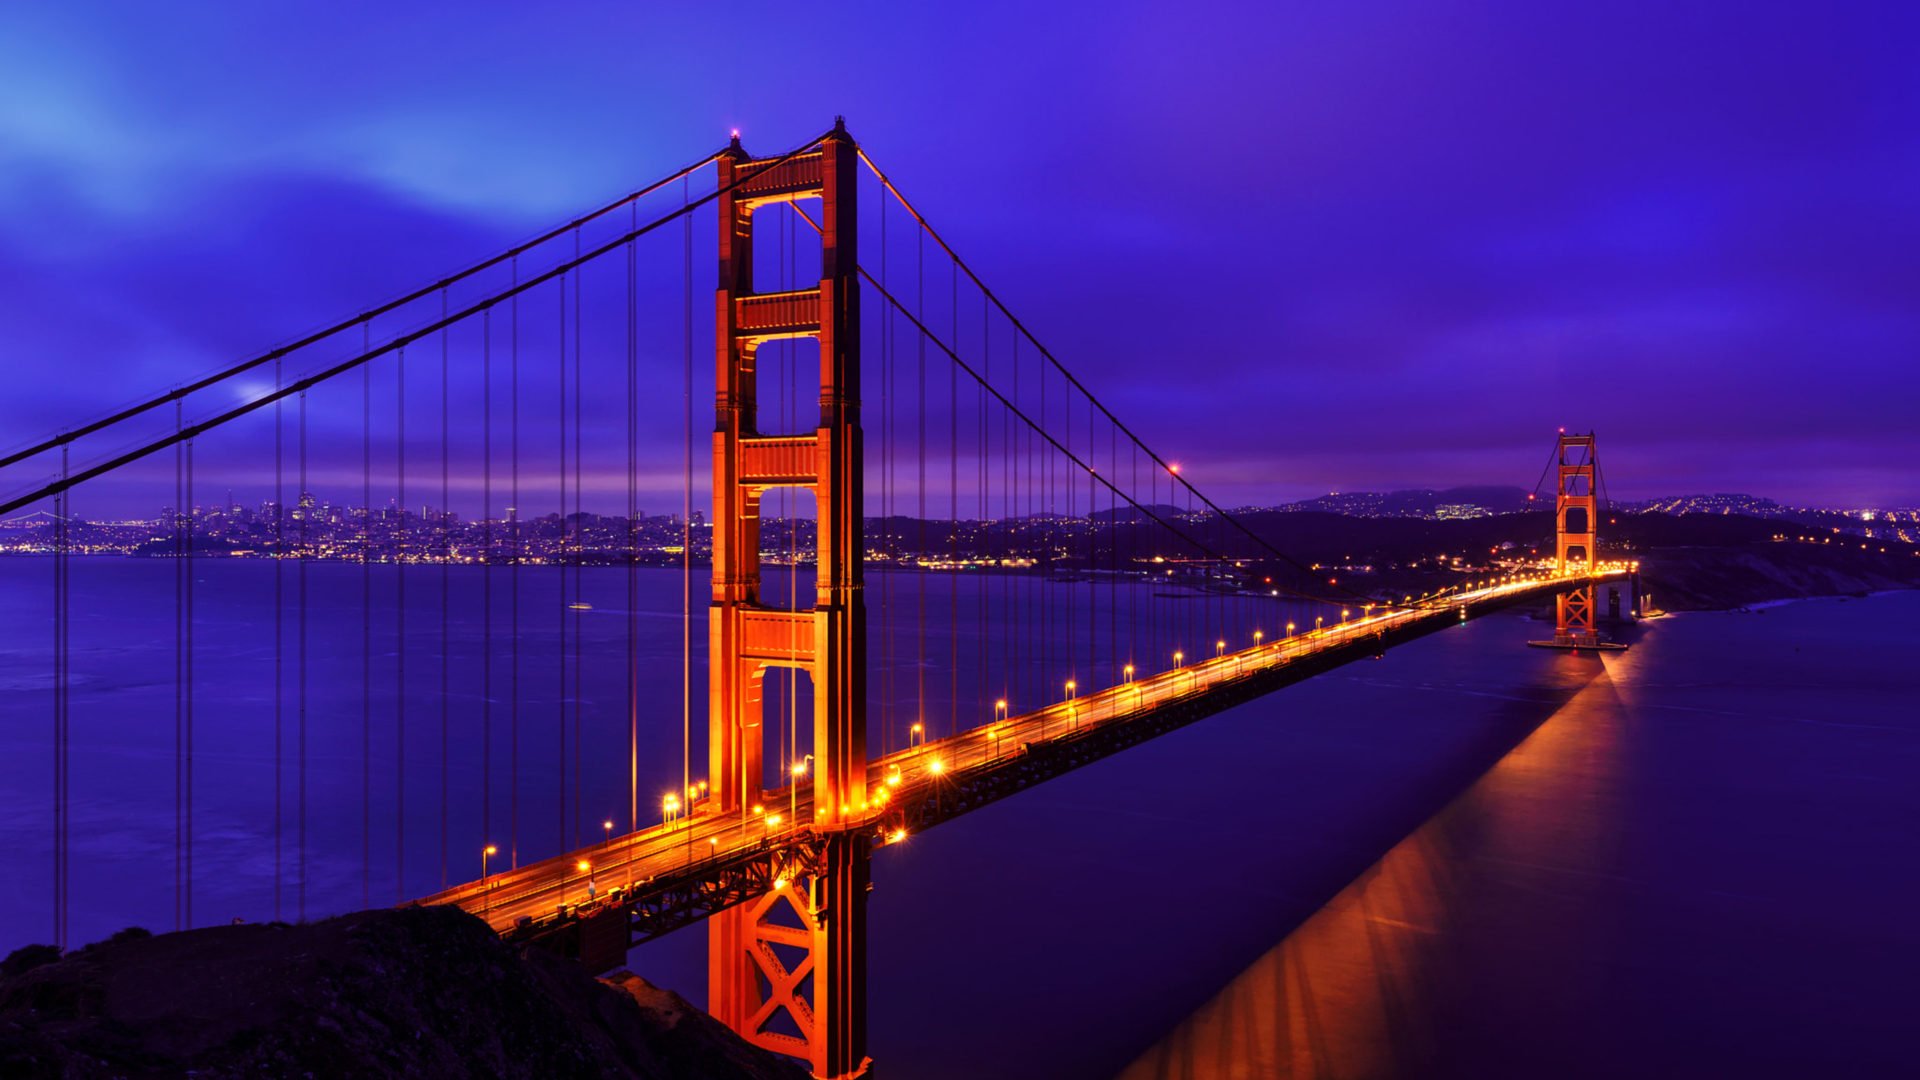 Golden Gate Bridge Blue Night Suspension Bridge In San Francisco California United States 4k Ultra Hd Wallpapers For Desktop And Mobile Phones : Wallpapers13